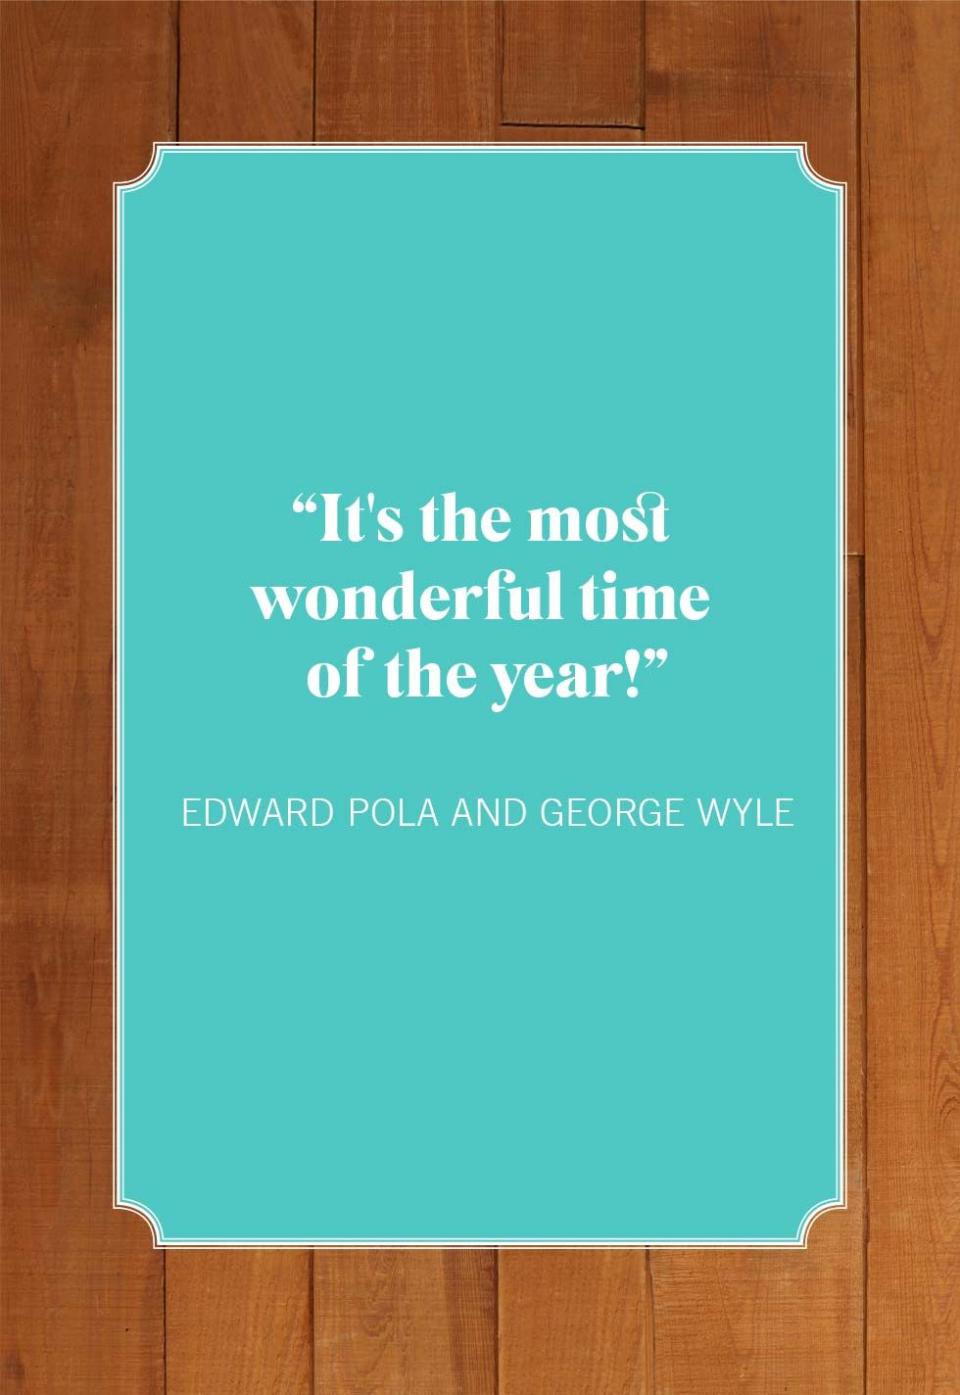 Edward Pola and George Wyle